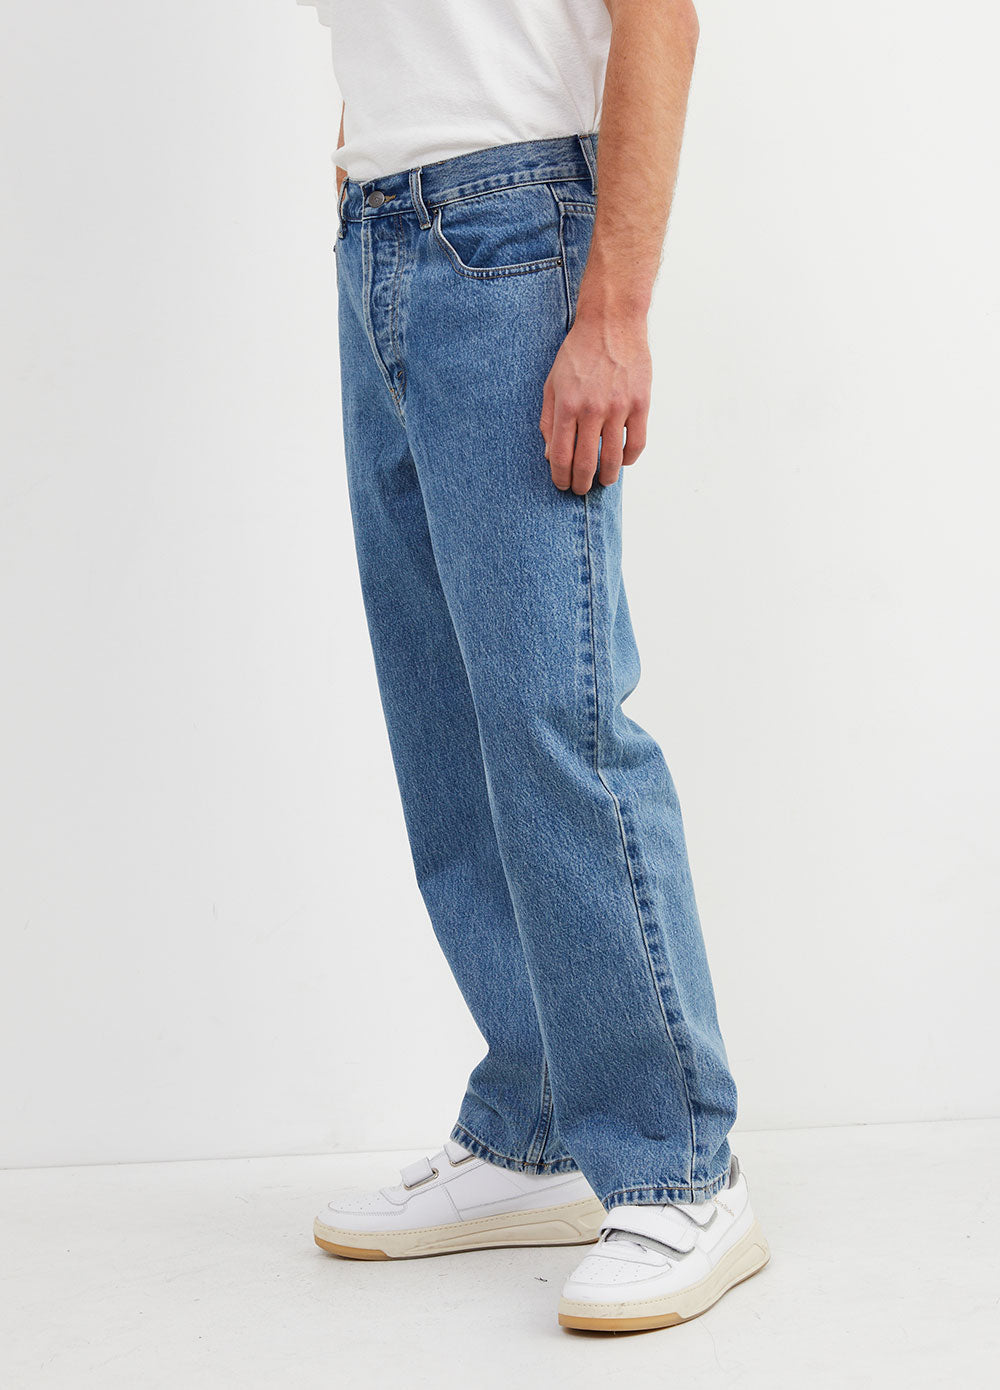 Lee RIDER CLASSIC - Straight leg jeans - classic indigo/blue denim 